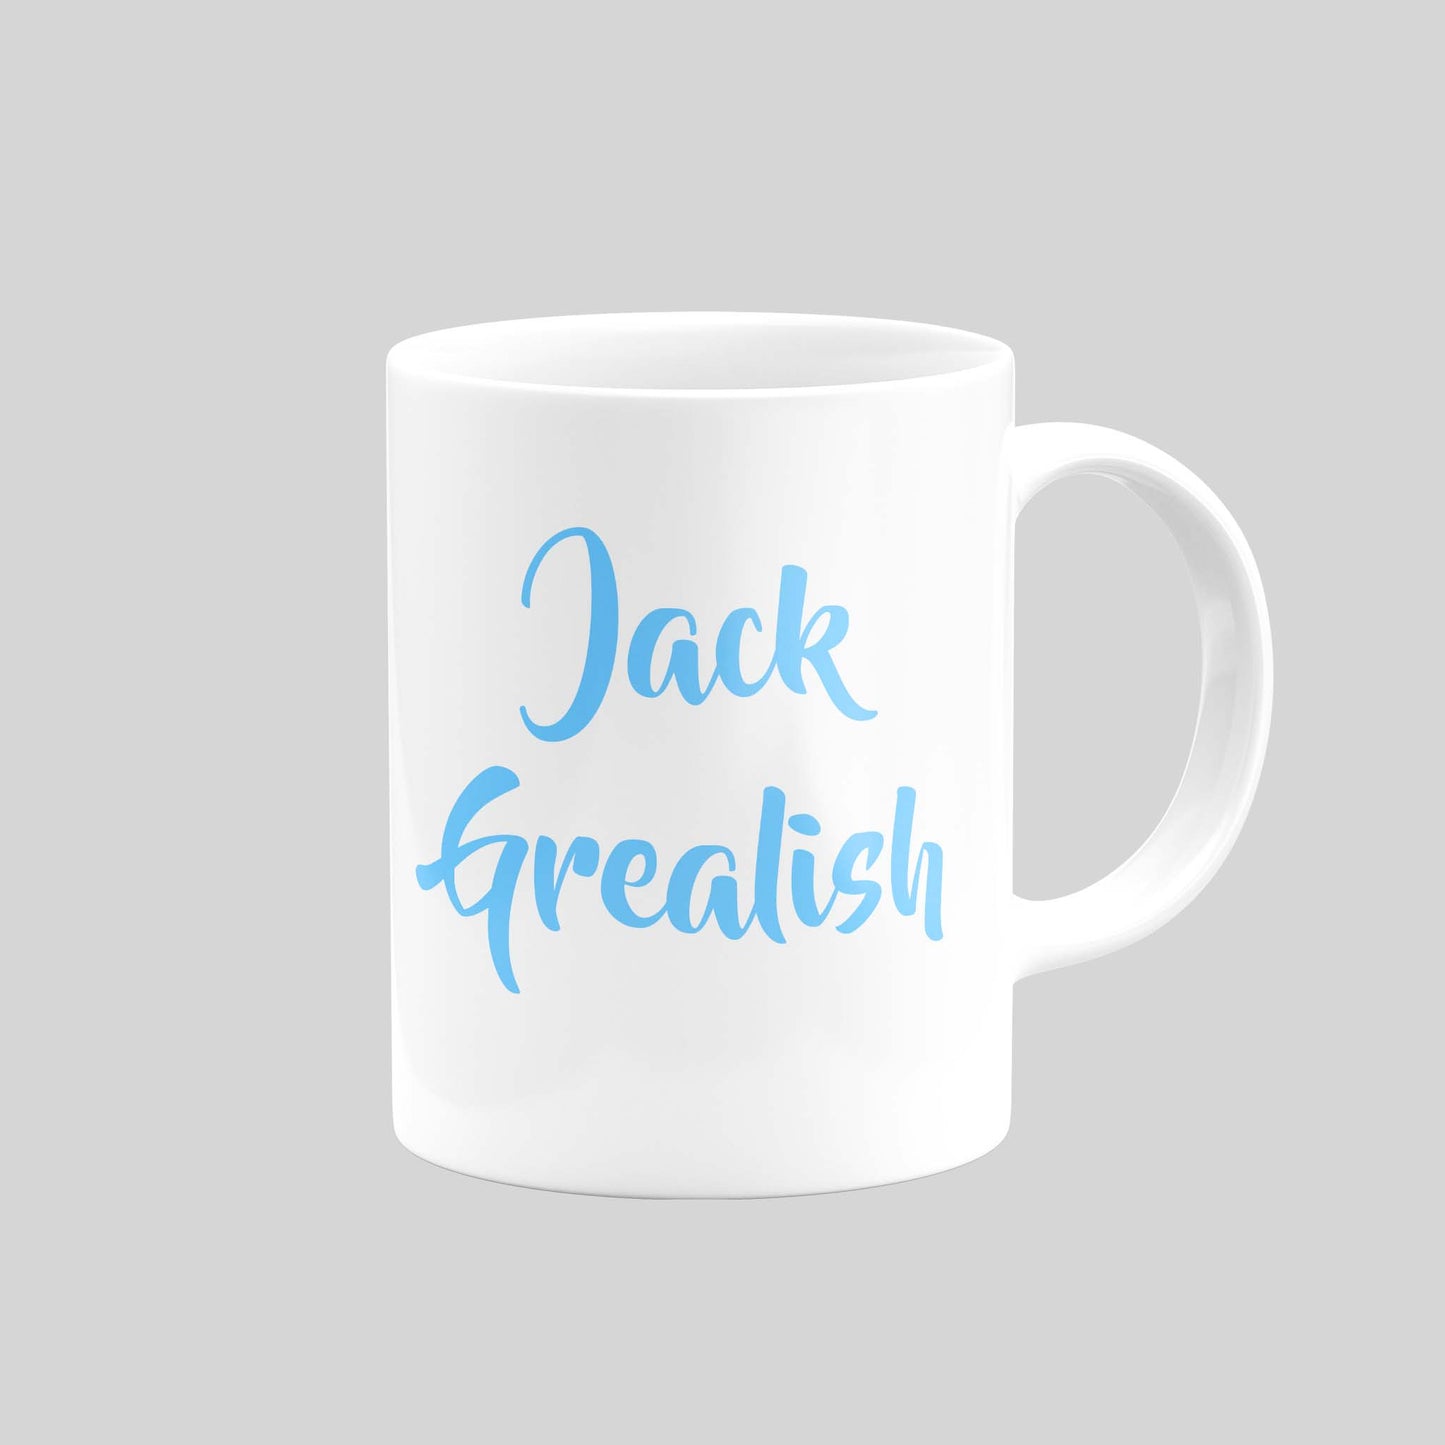 Jack Grealish Mug